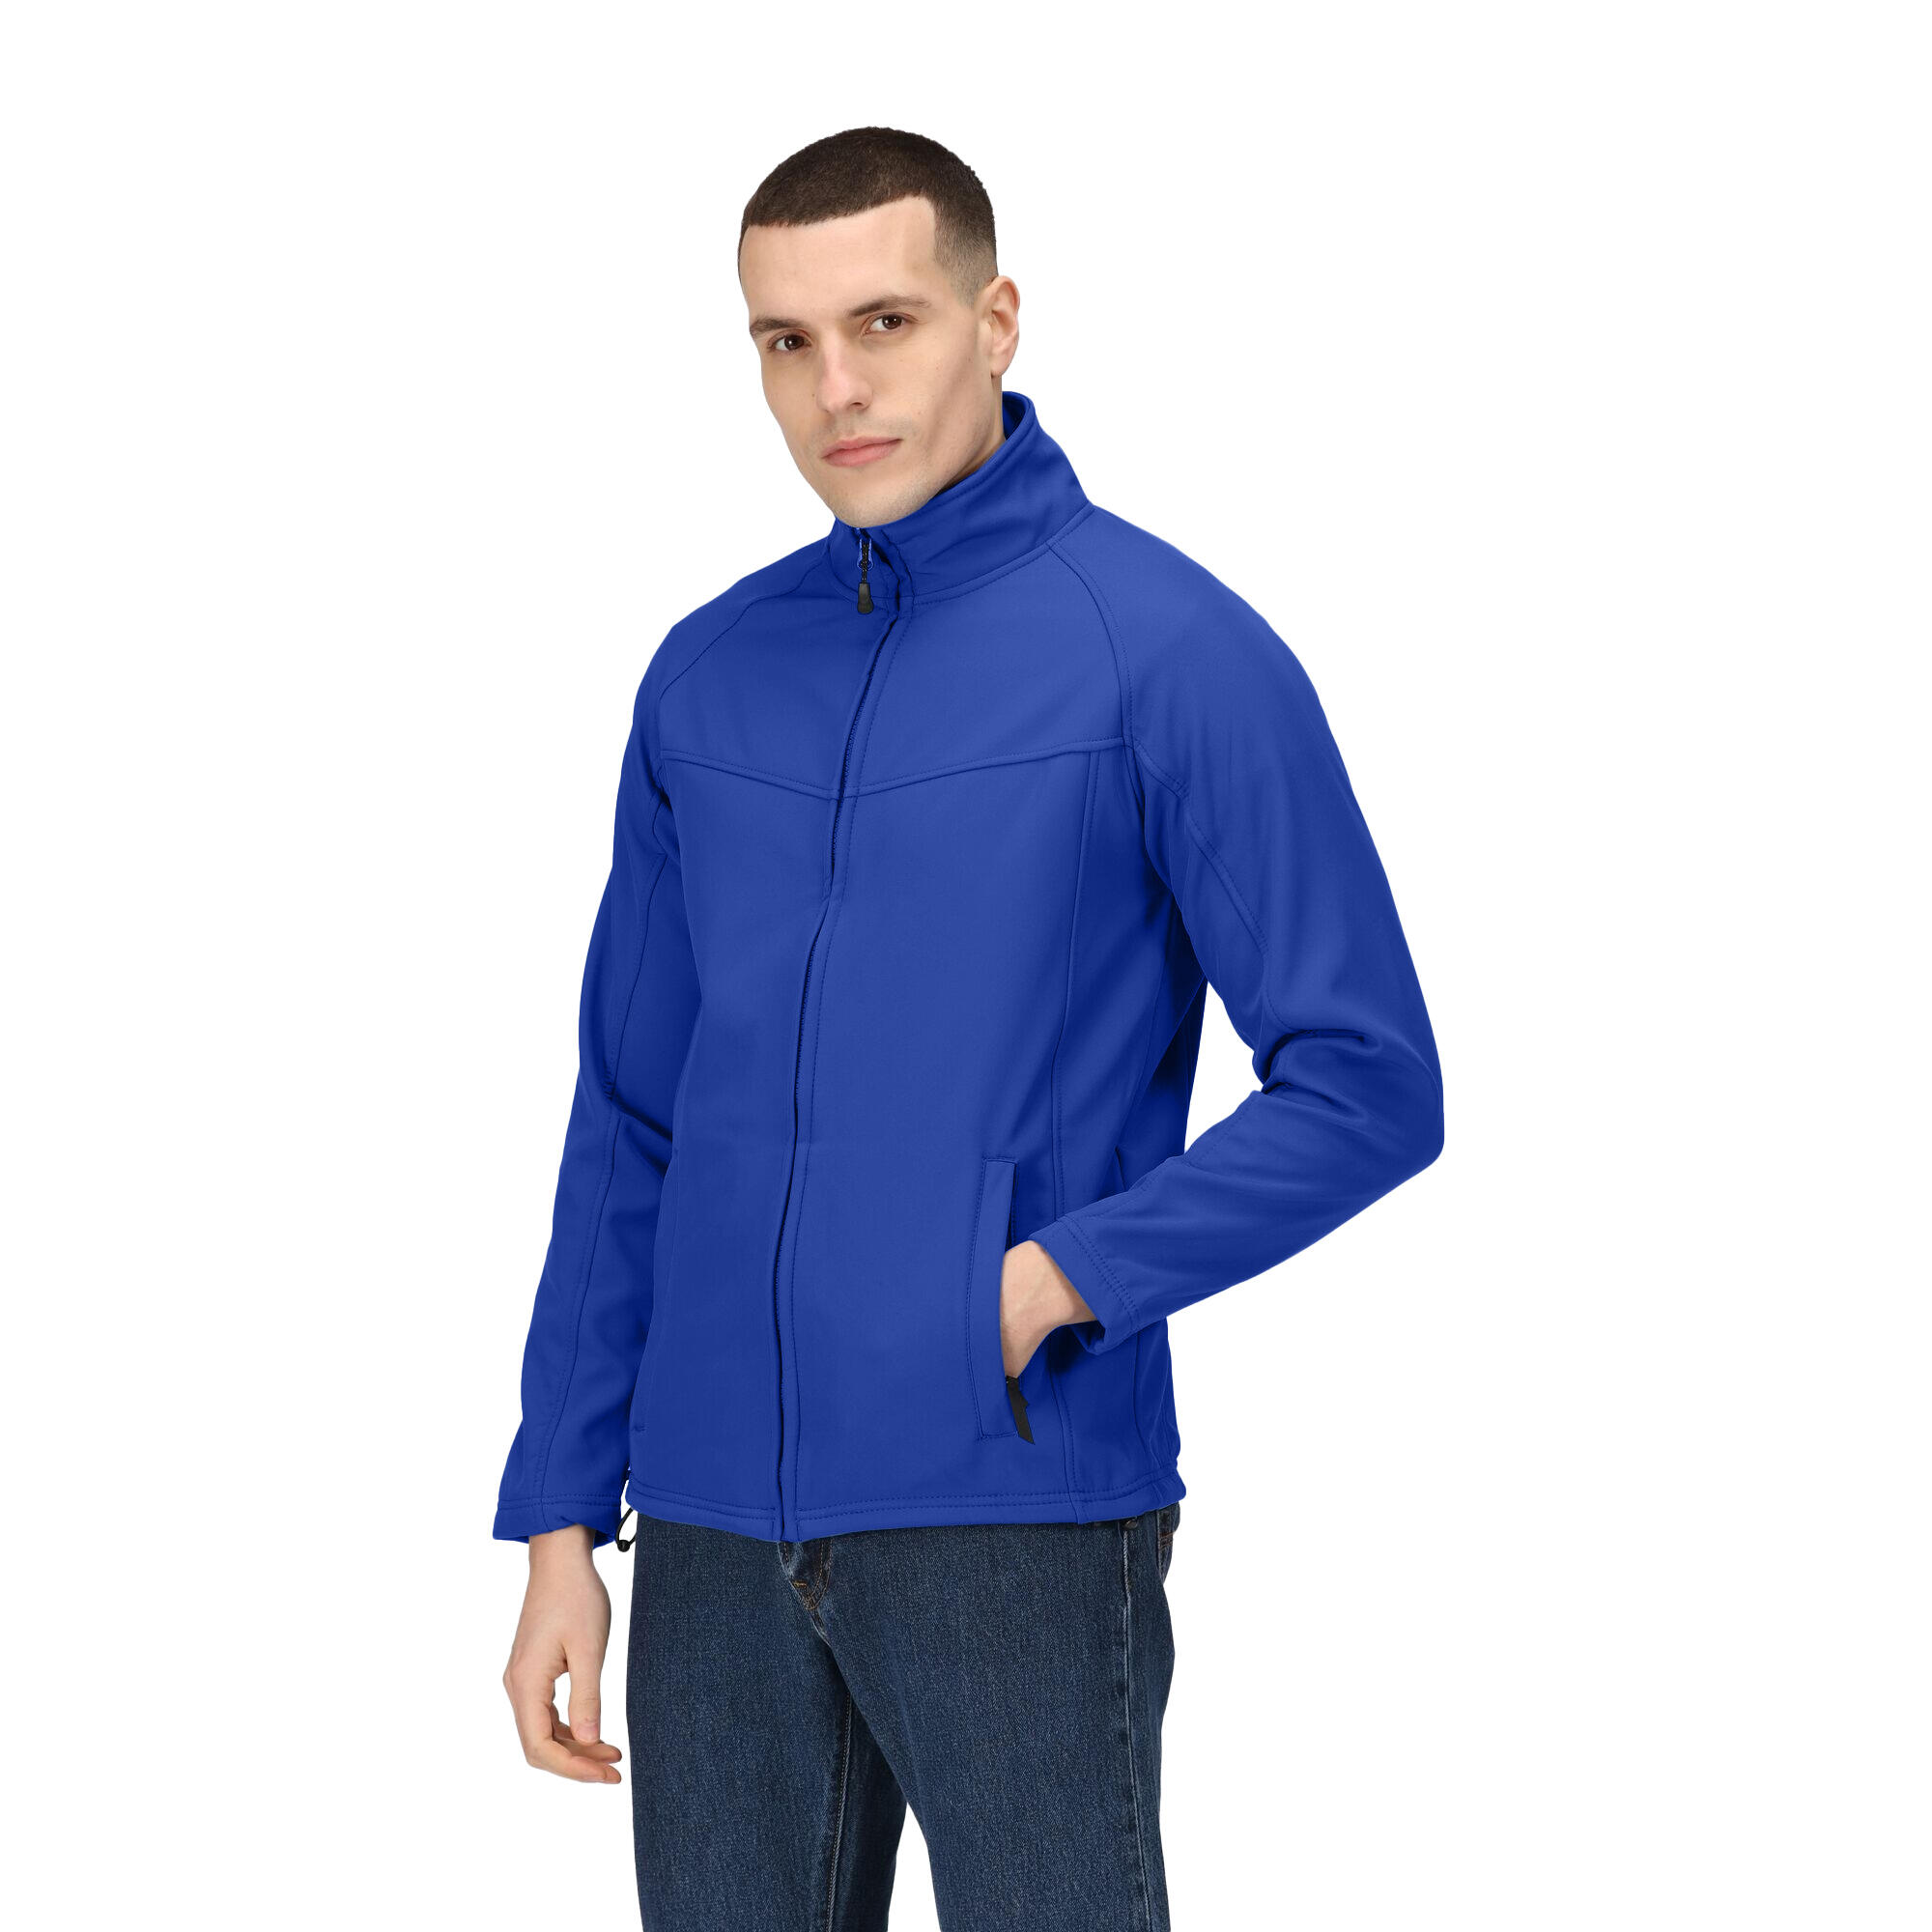 Uproar Mens Softshell Wind Resistant Fleece Jacket (Bright Royal Blue) 3/4